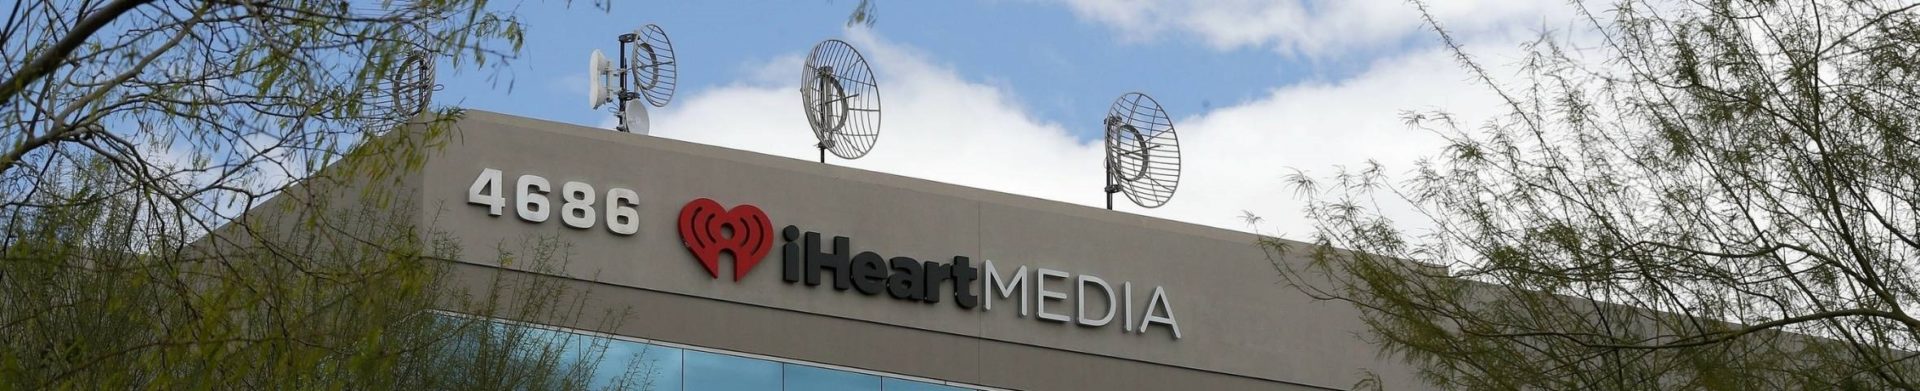 iHeartmedia headquarters in the daytime